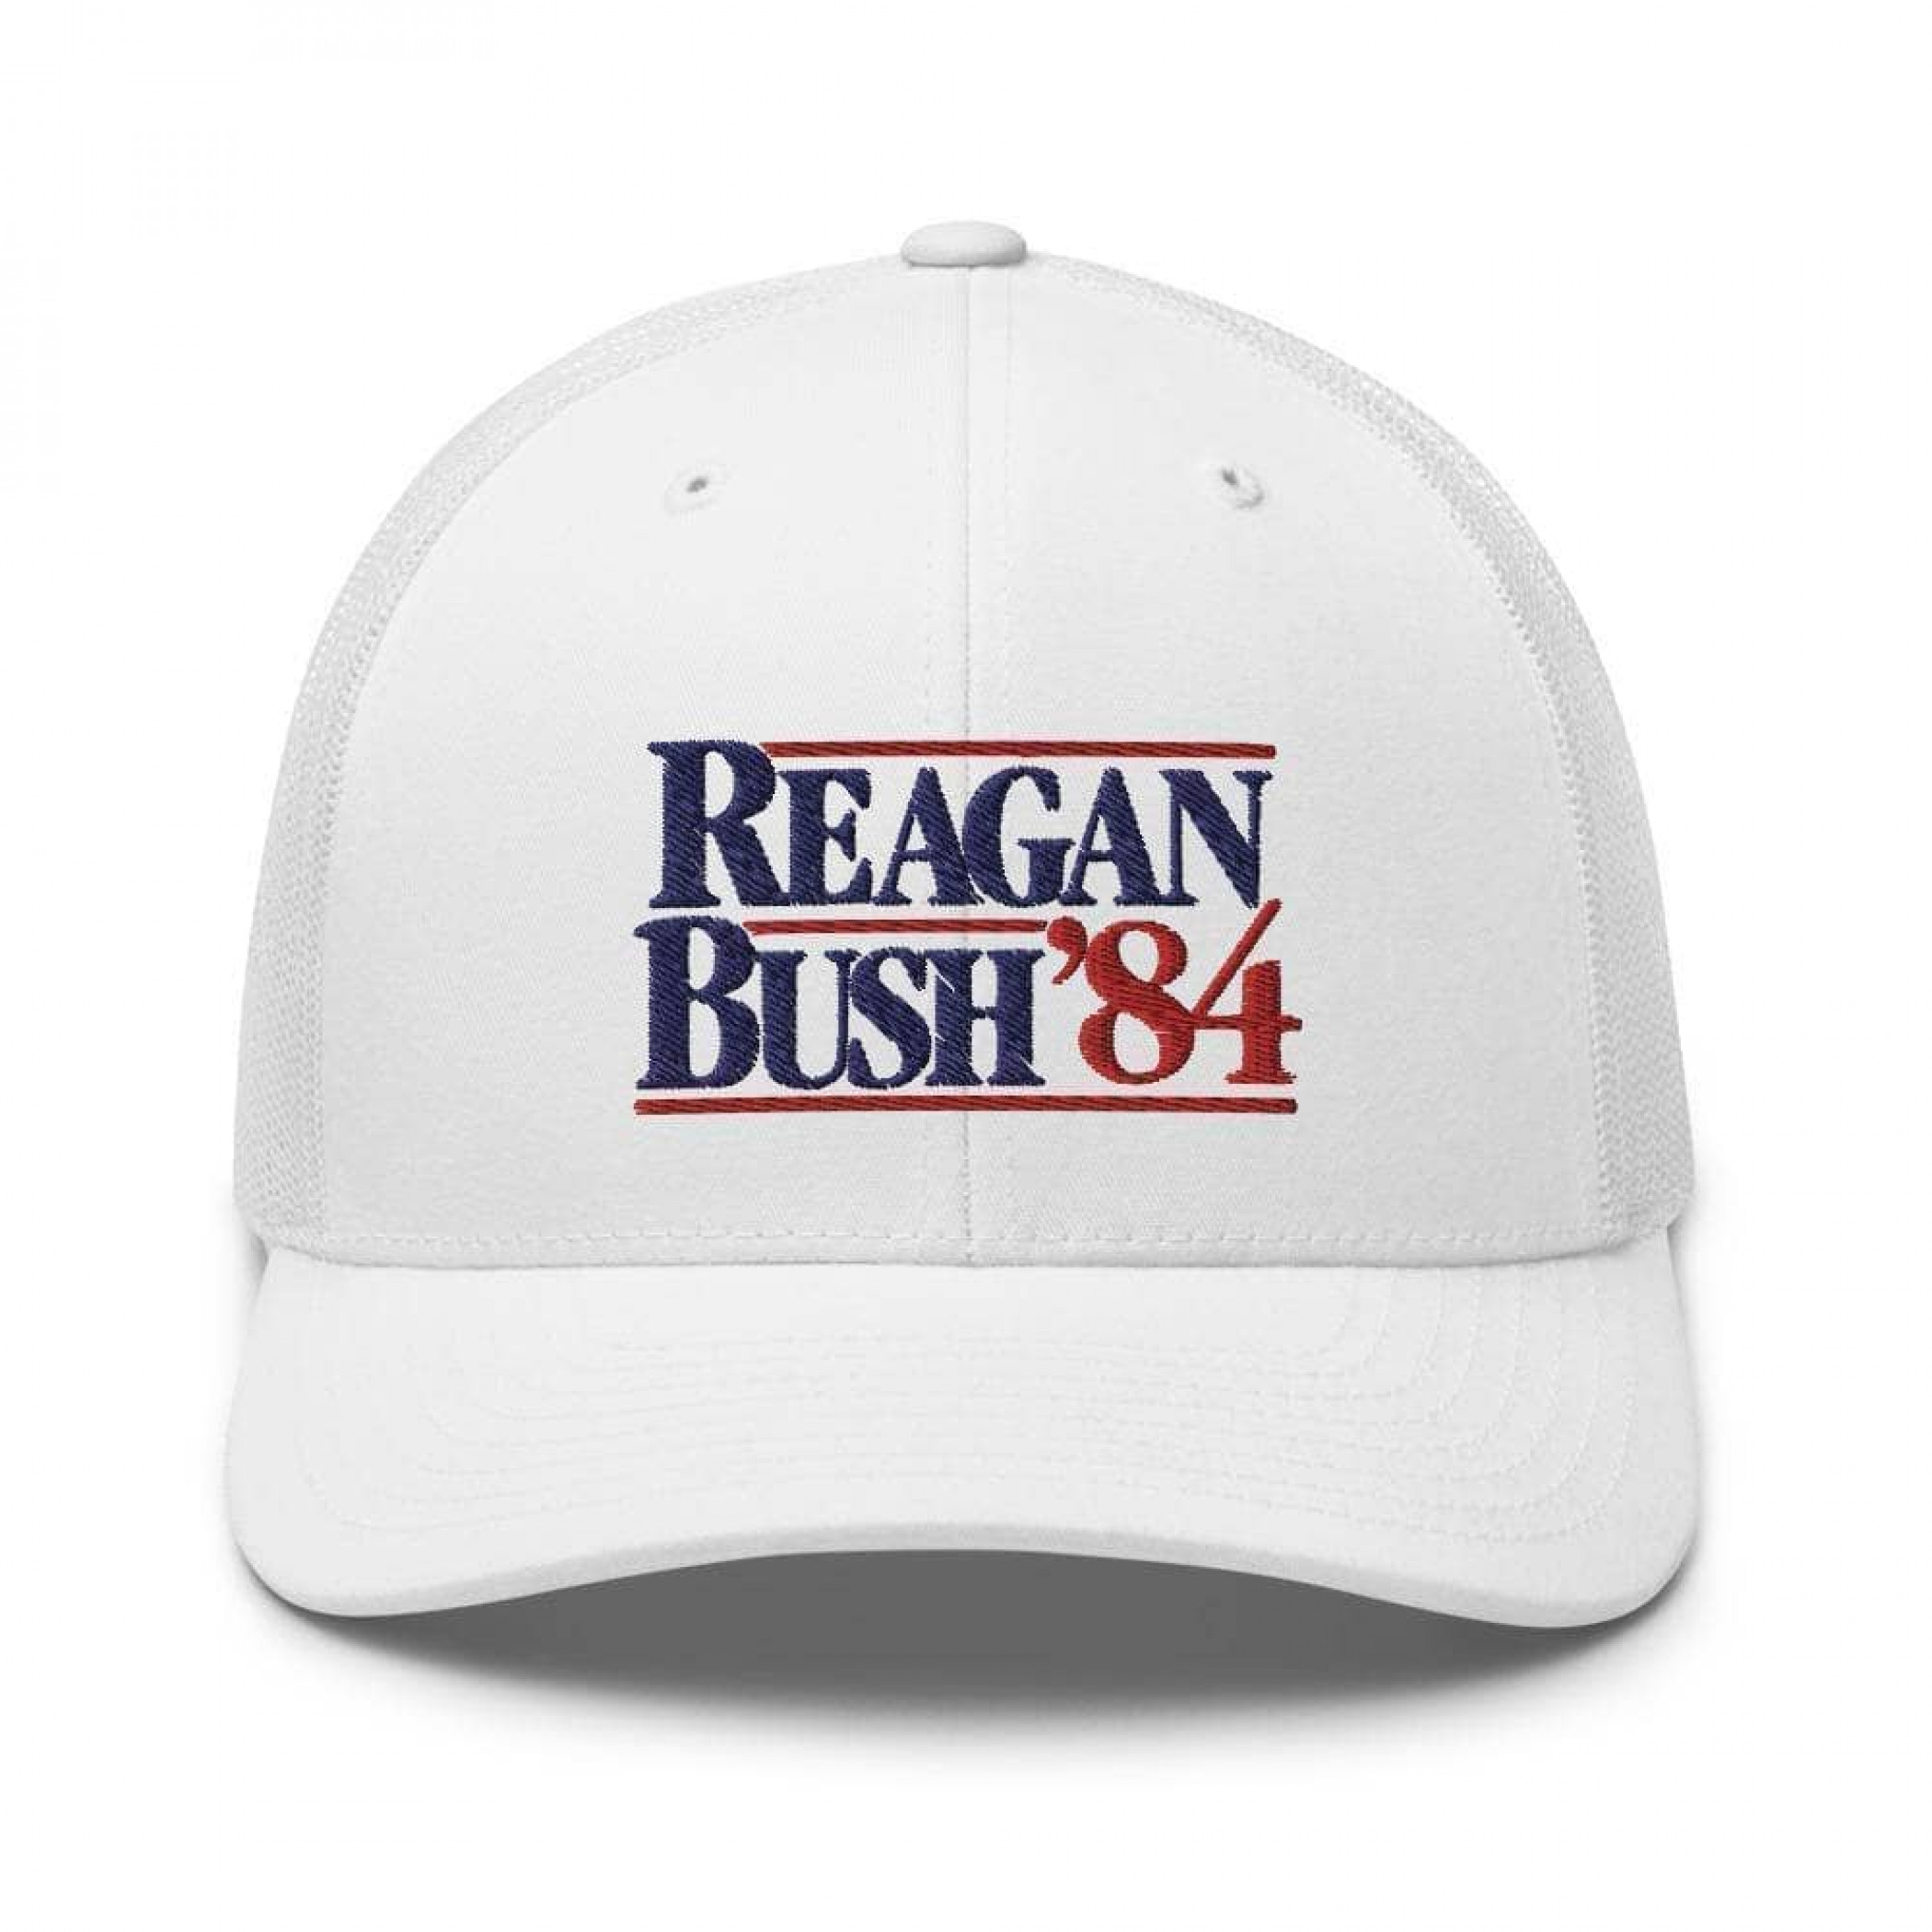 Reagan Bush '84 - White